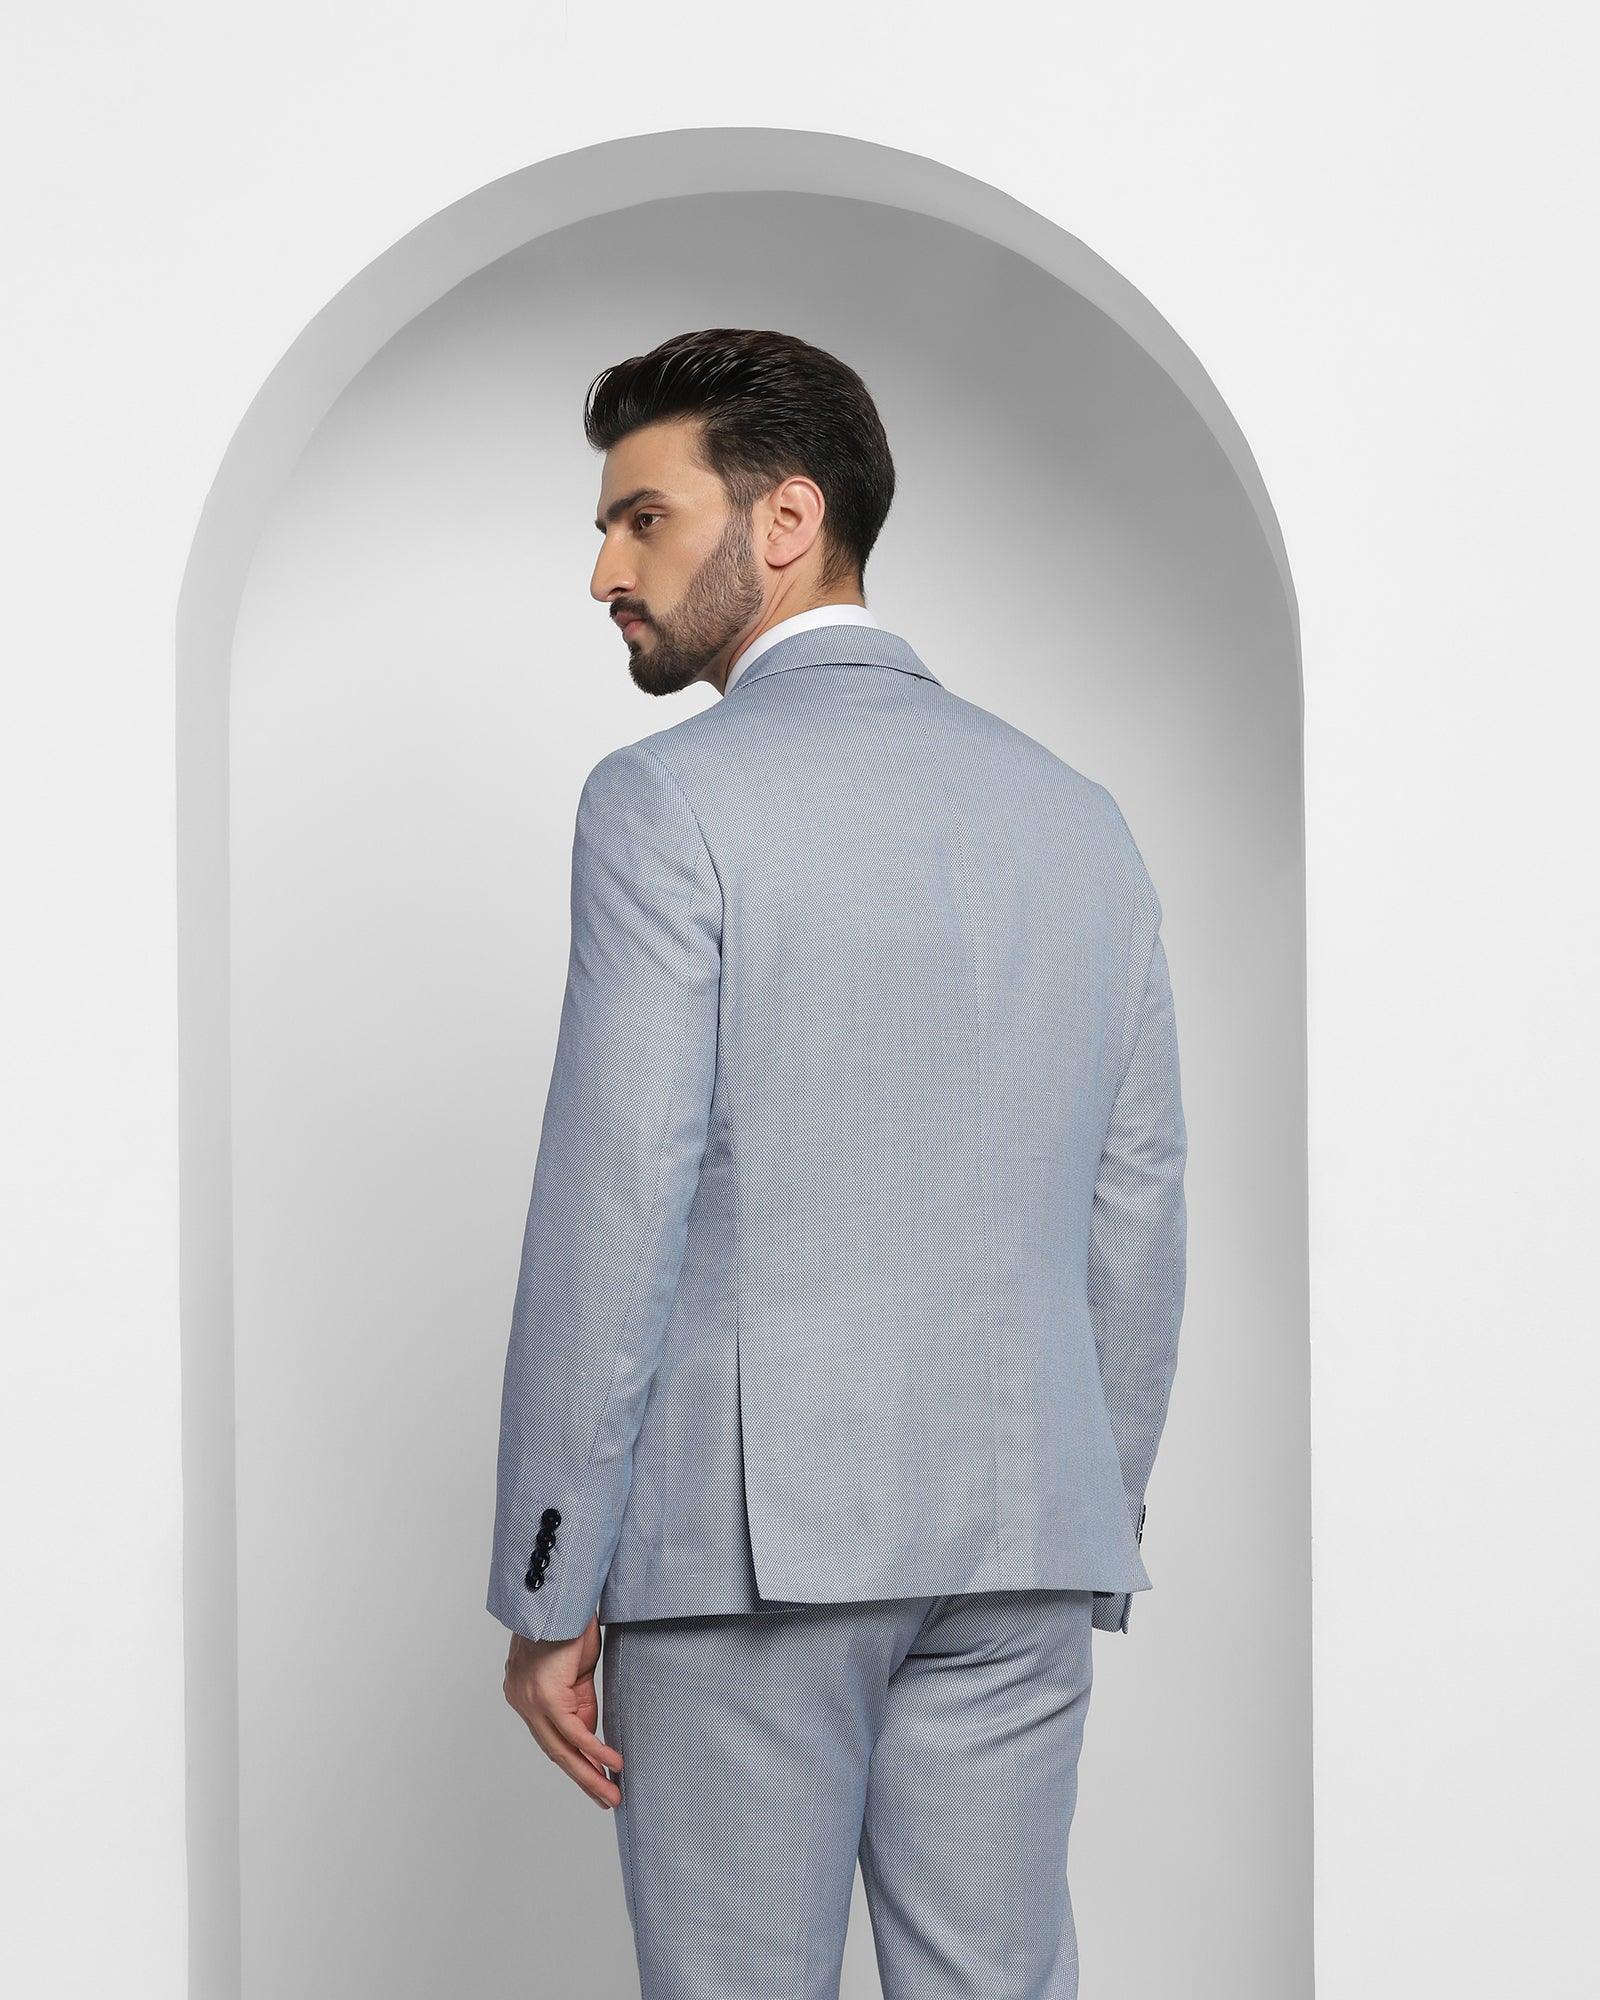 Linen Multitude 6X Blue Textured Formal Suit - Peter